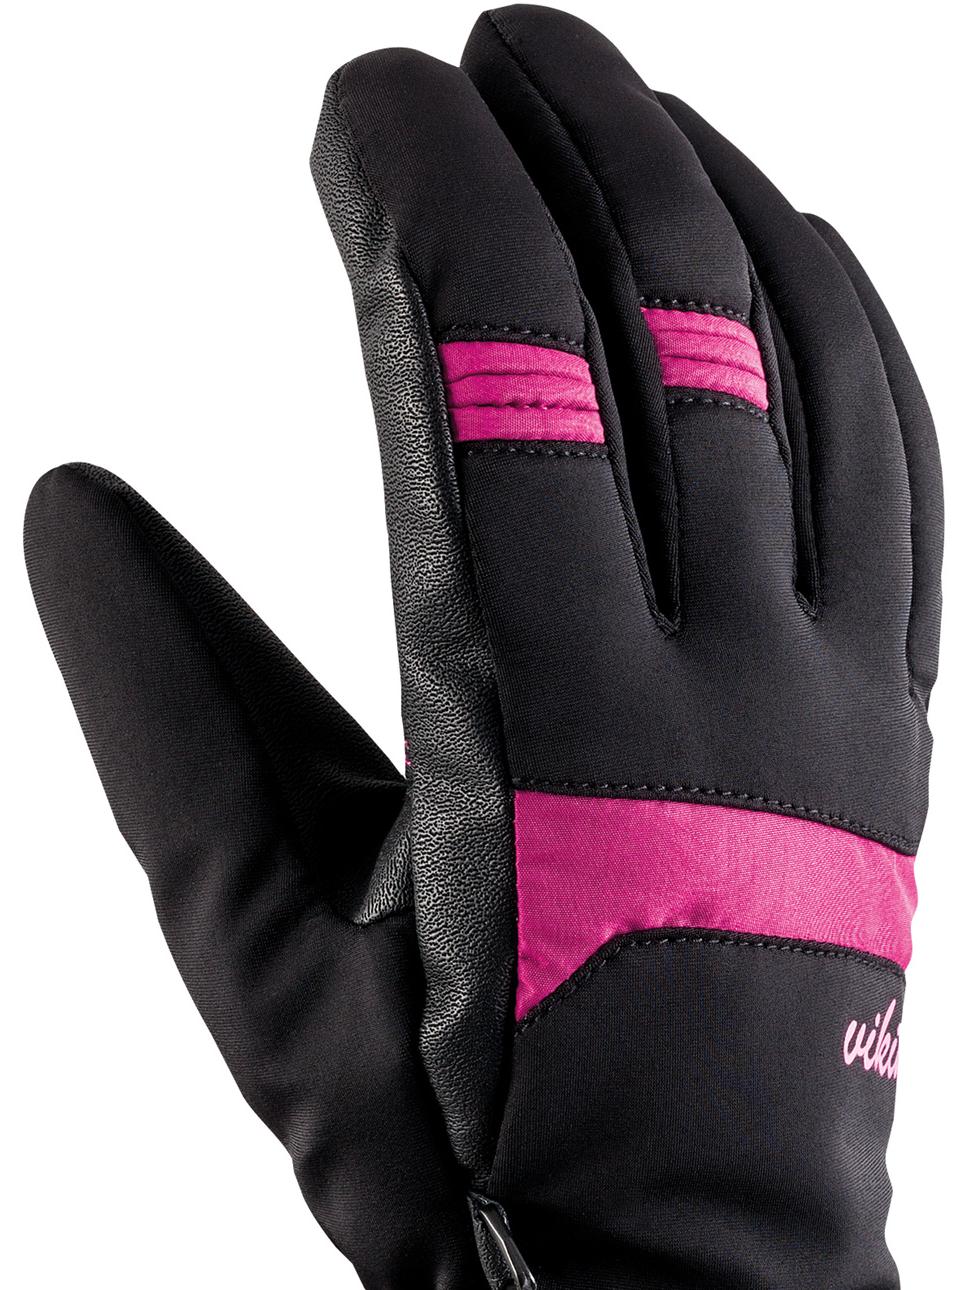 Перчатки VIKING Paganella GTX Ski Pink